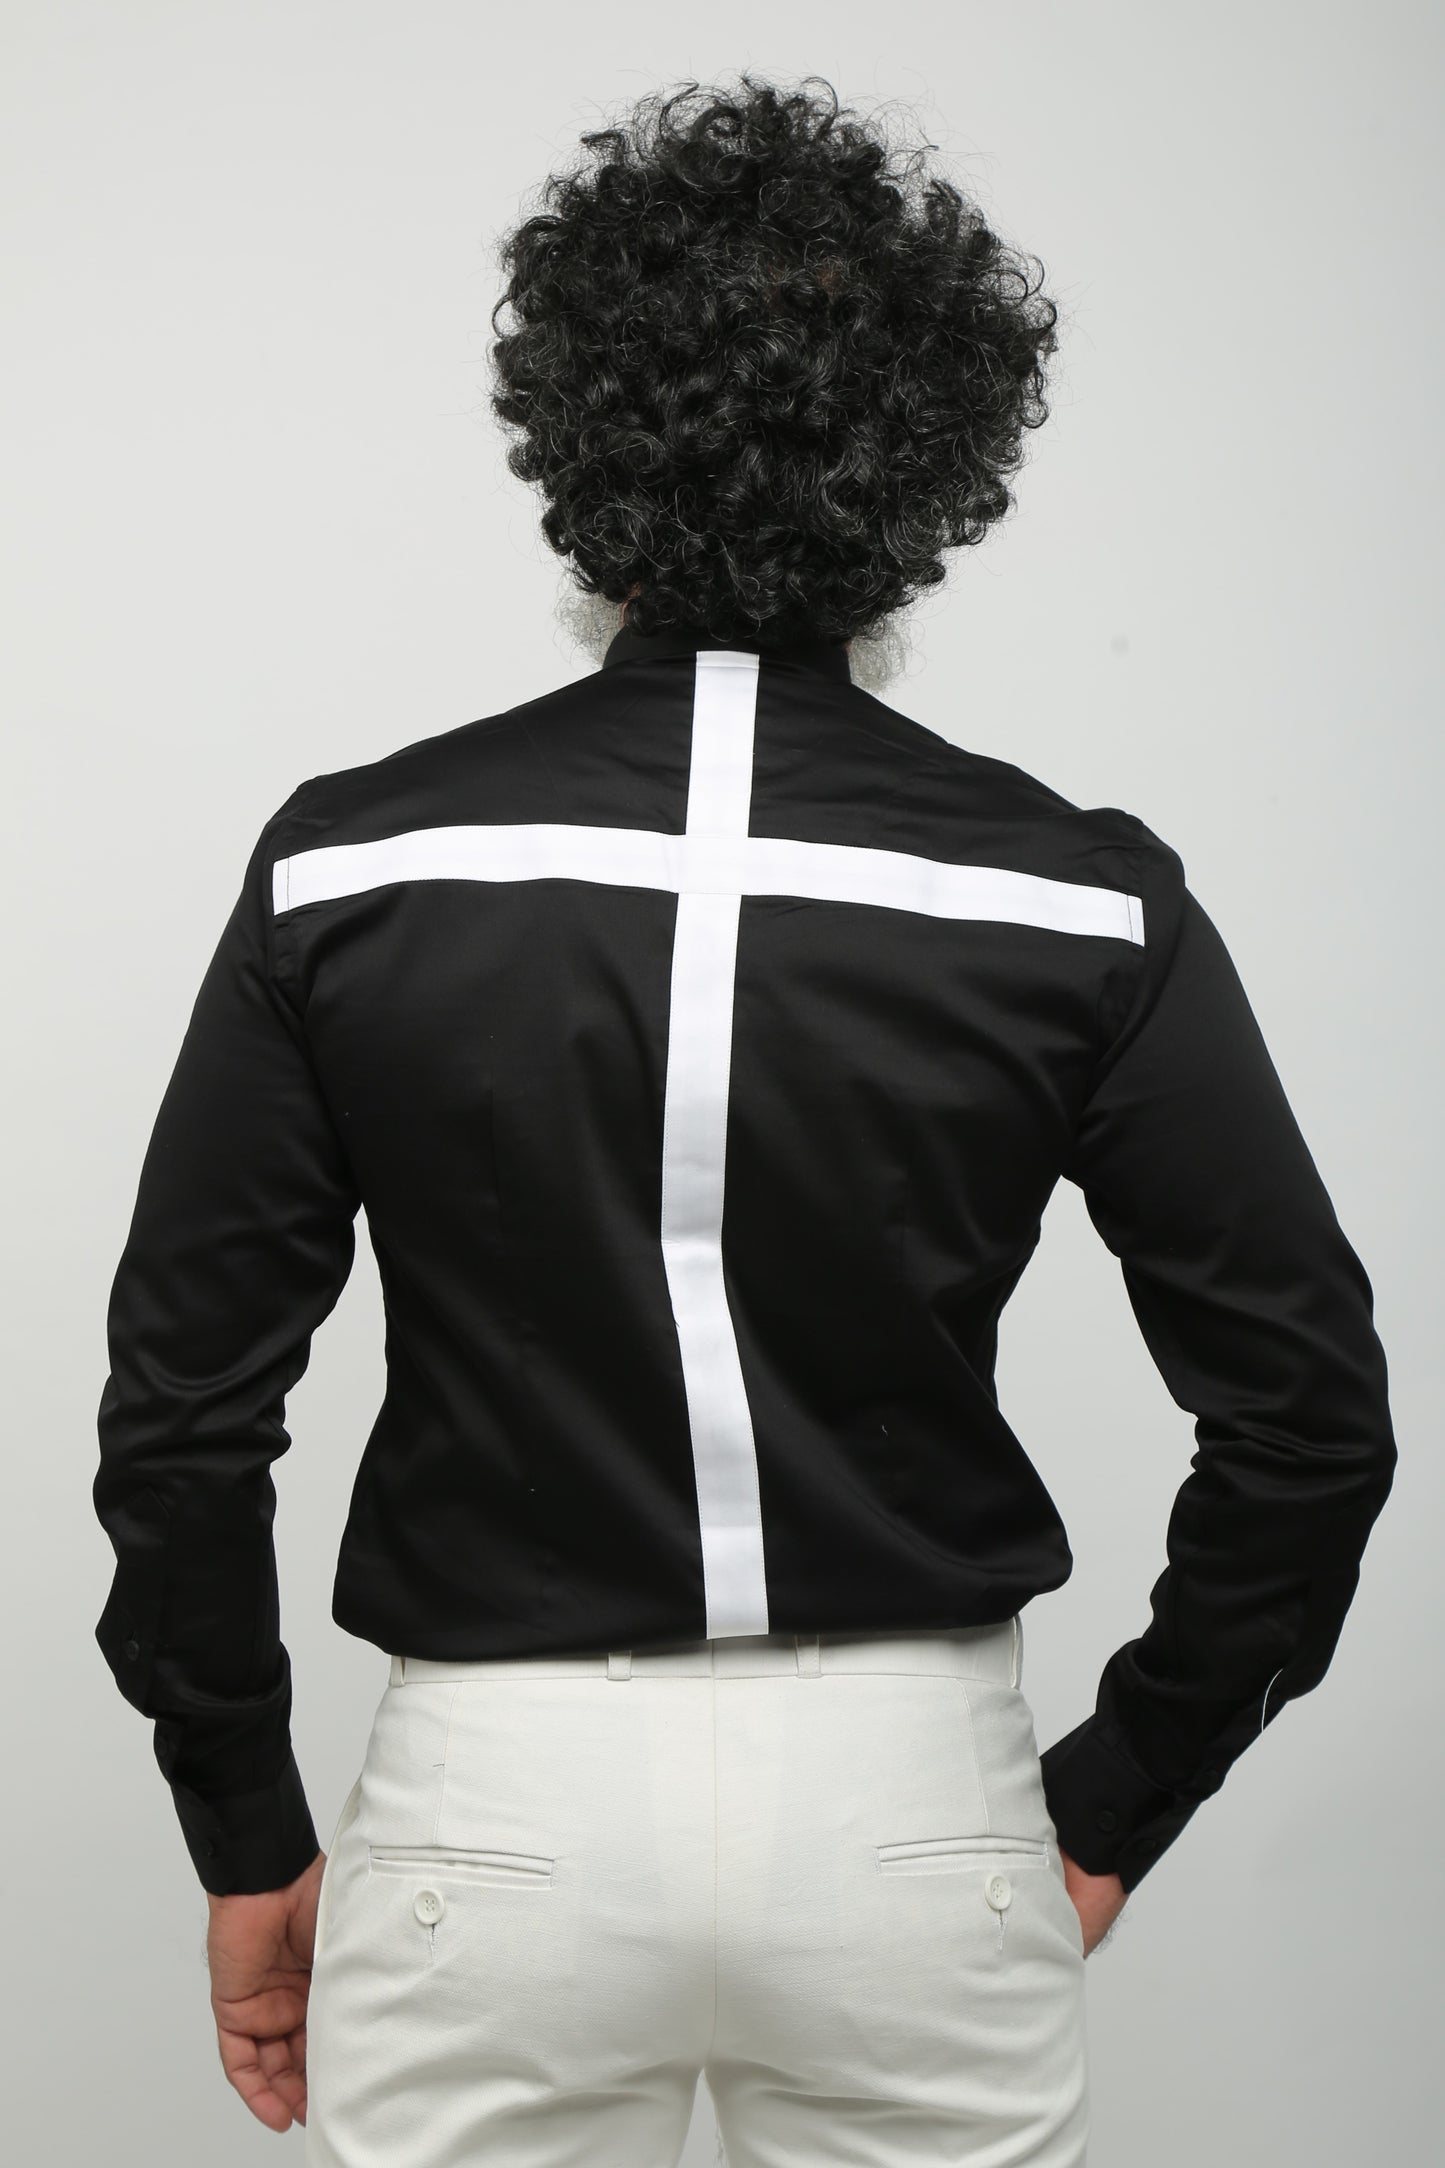 Black Cross Casual Shirt